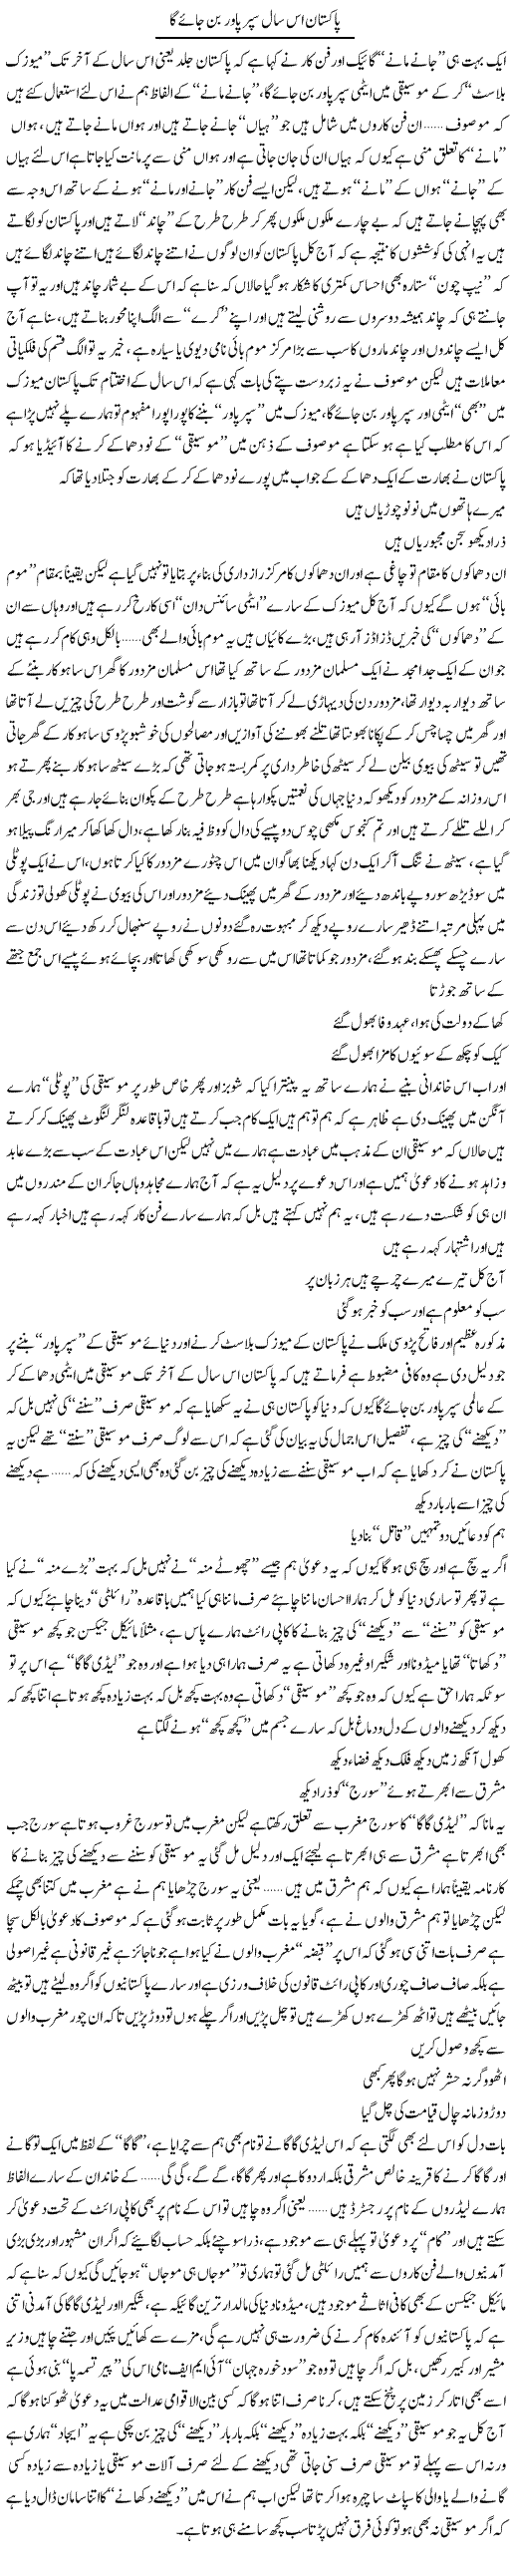 Pakistan Is Saal Super Power Ban Jae Ga | Saad Ullah Jan Barq | Daily Urdu Columns